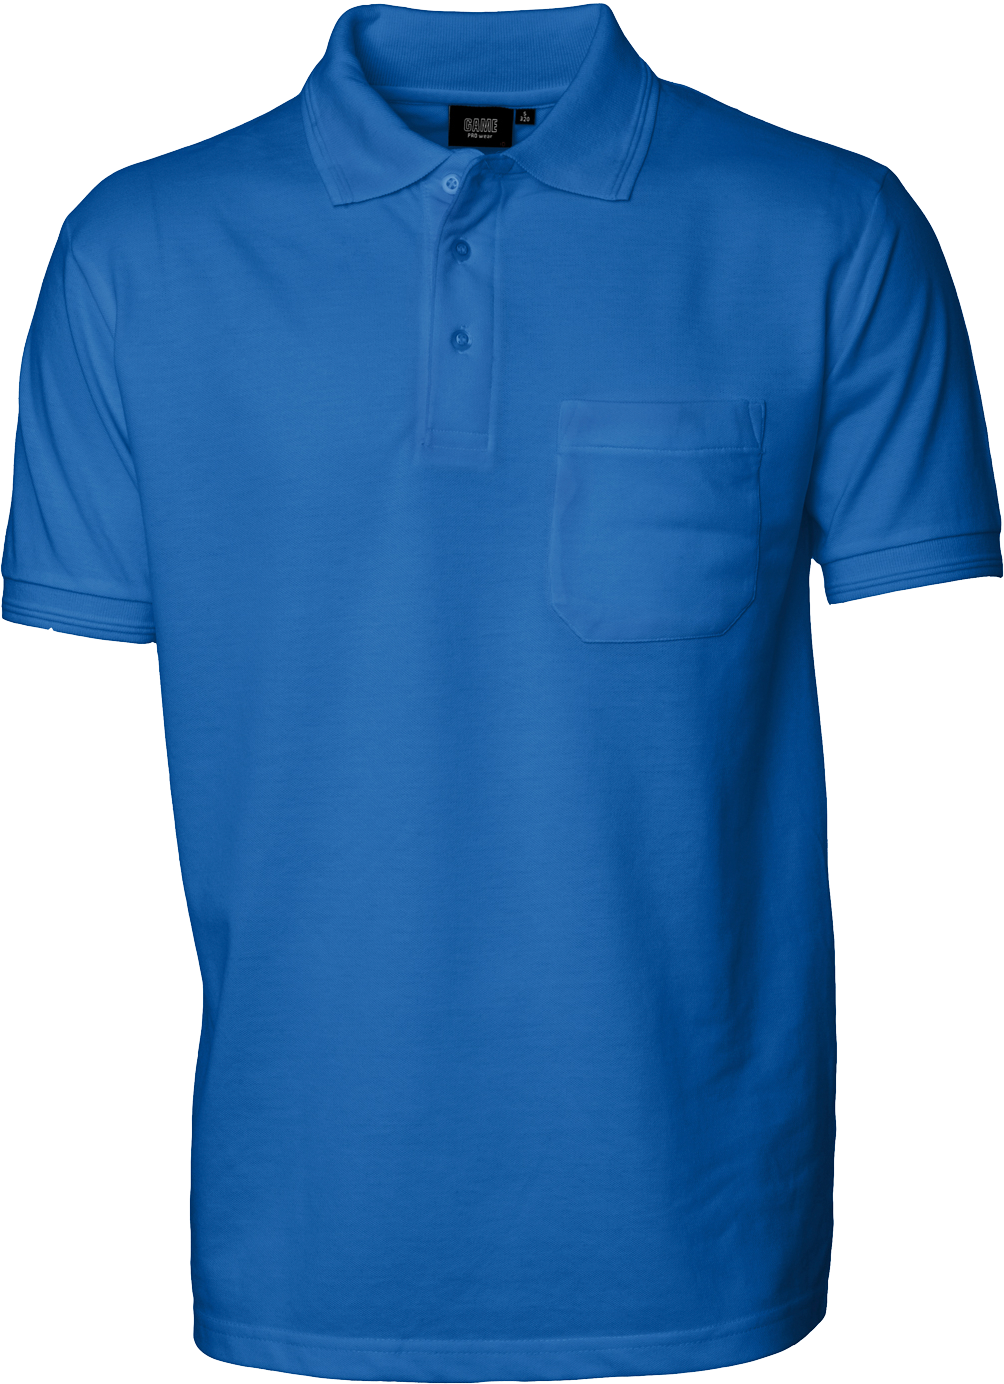 Azurblau Herren Polo Shirt m. Brusttasche, Prowear (8250281)